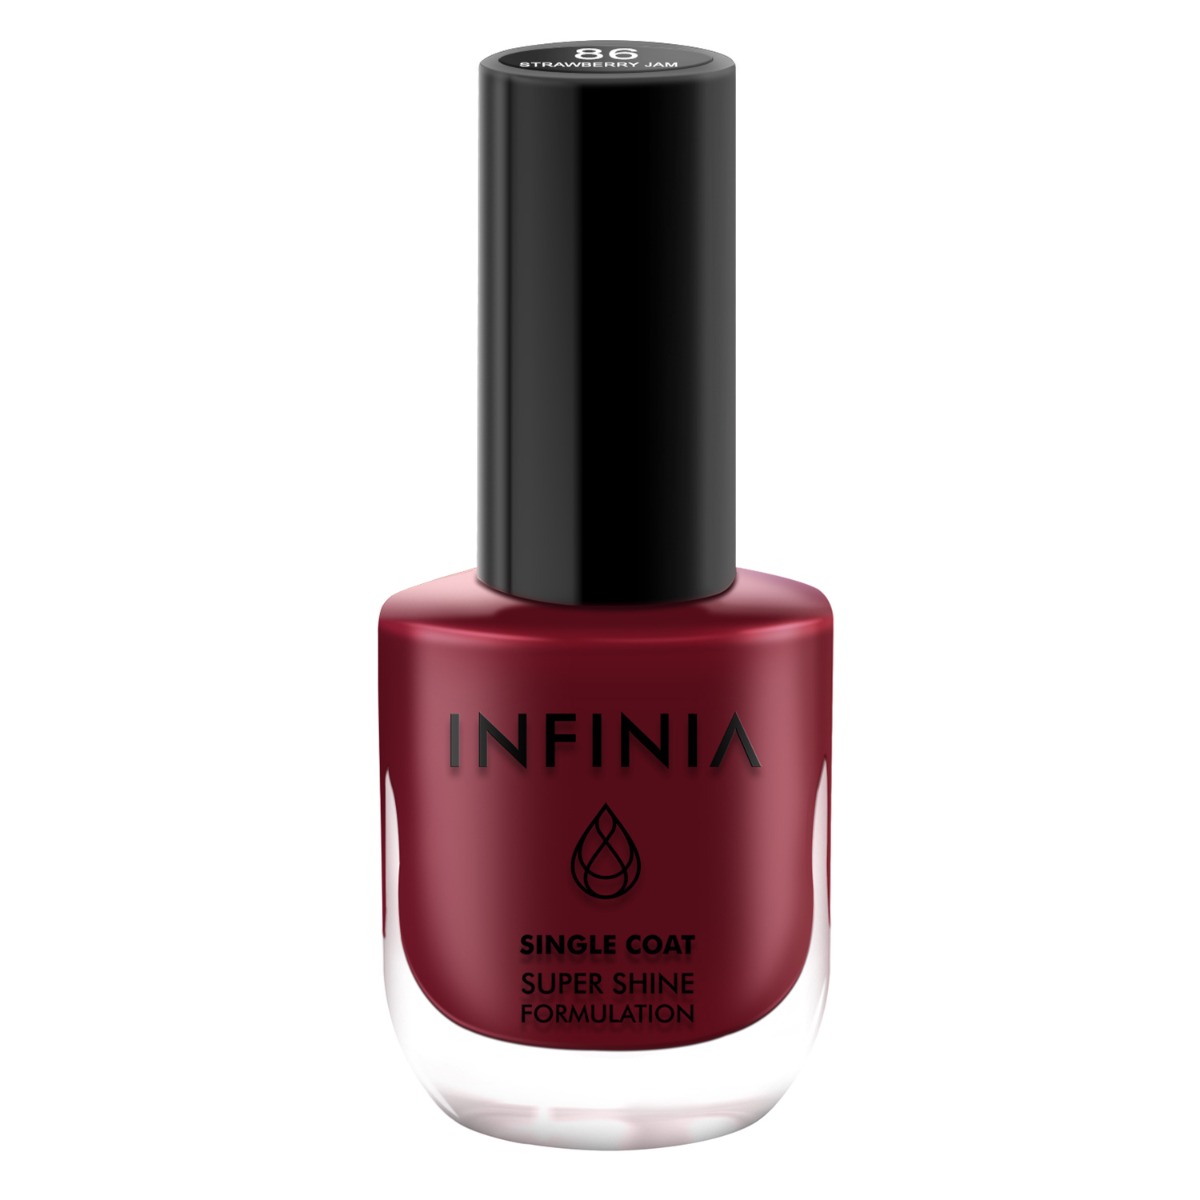 INFINIA Single Coat Super Shine Nail Polish With Ultra High Gloss, 12ml-086 Strawberry Jam